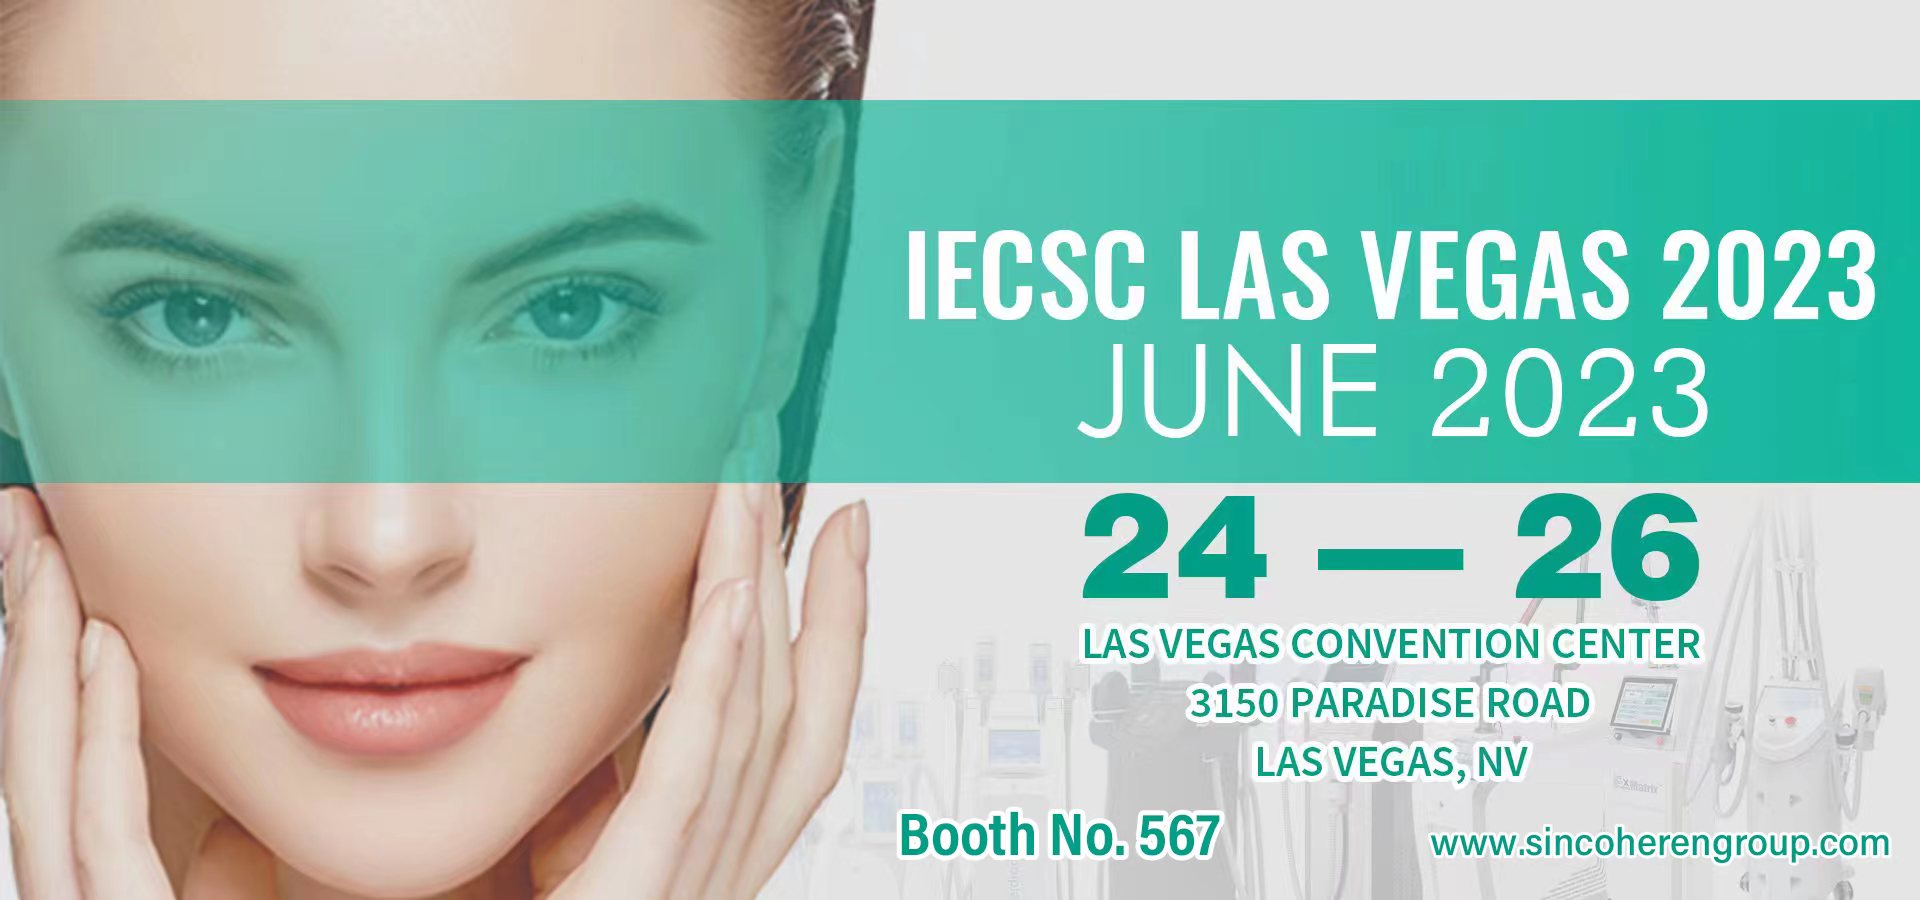 Sincoheren menjemput anda untuk menghadiri pameran kecantikan IECSC Las Vegas